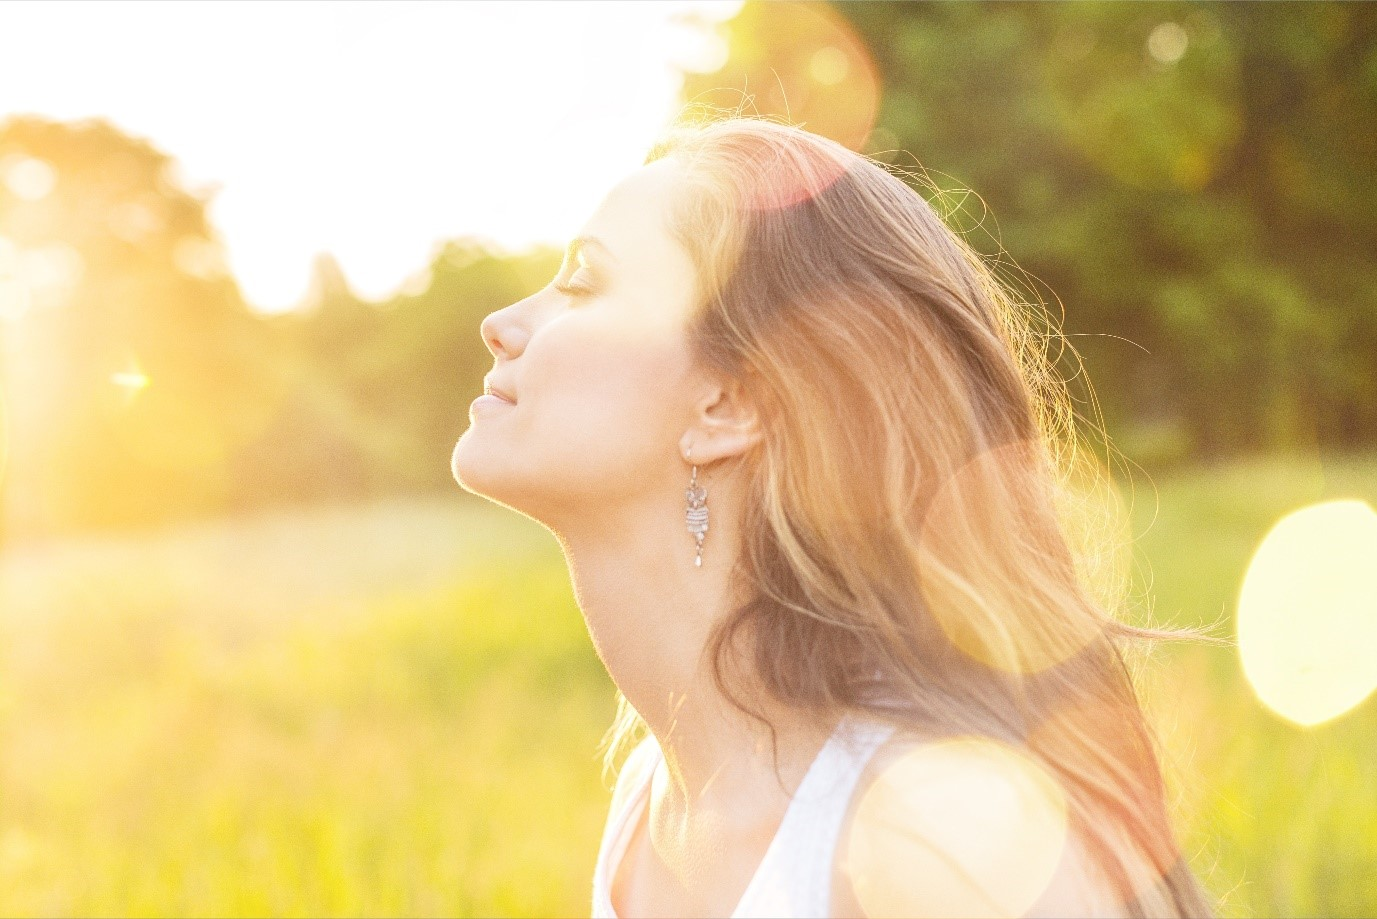 Sunshine provides vitamin D, but UV rays can damage the skin